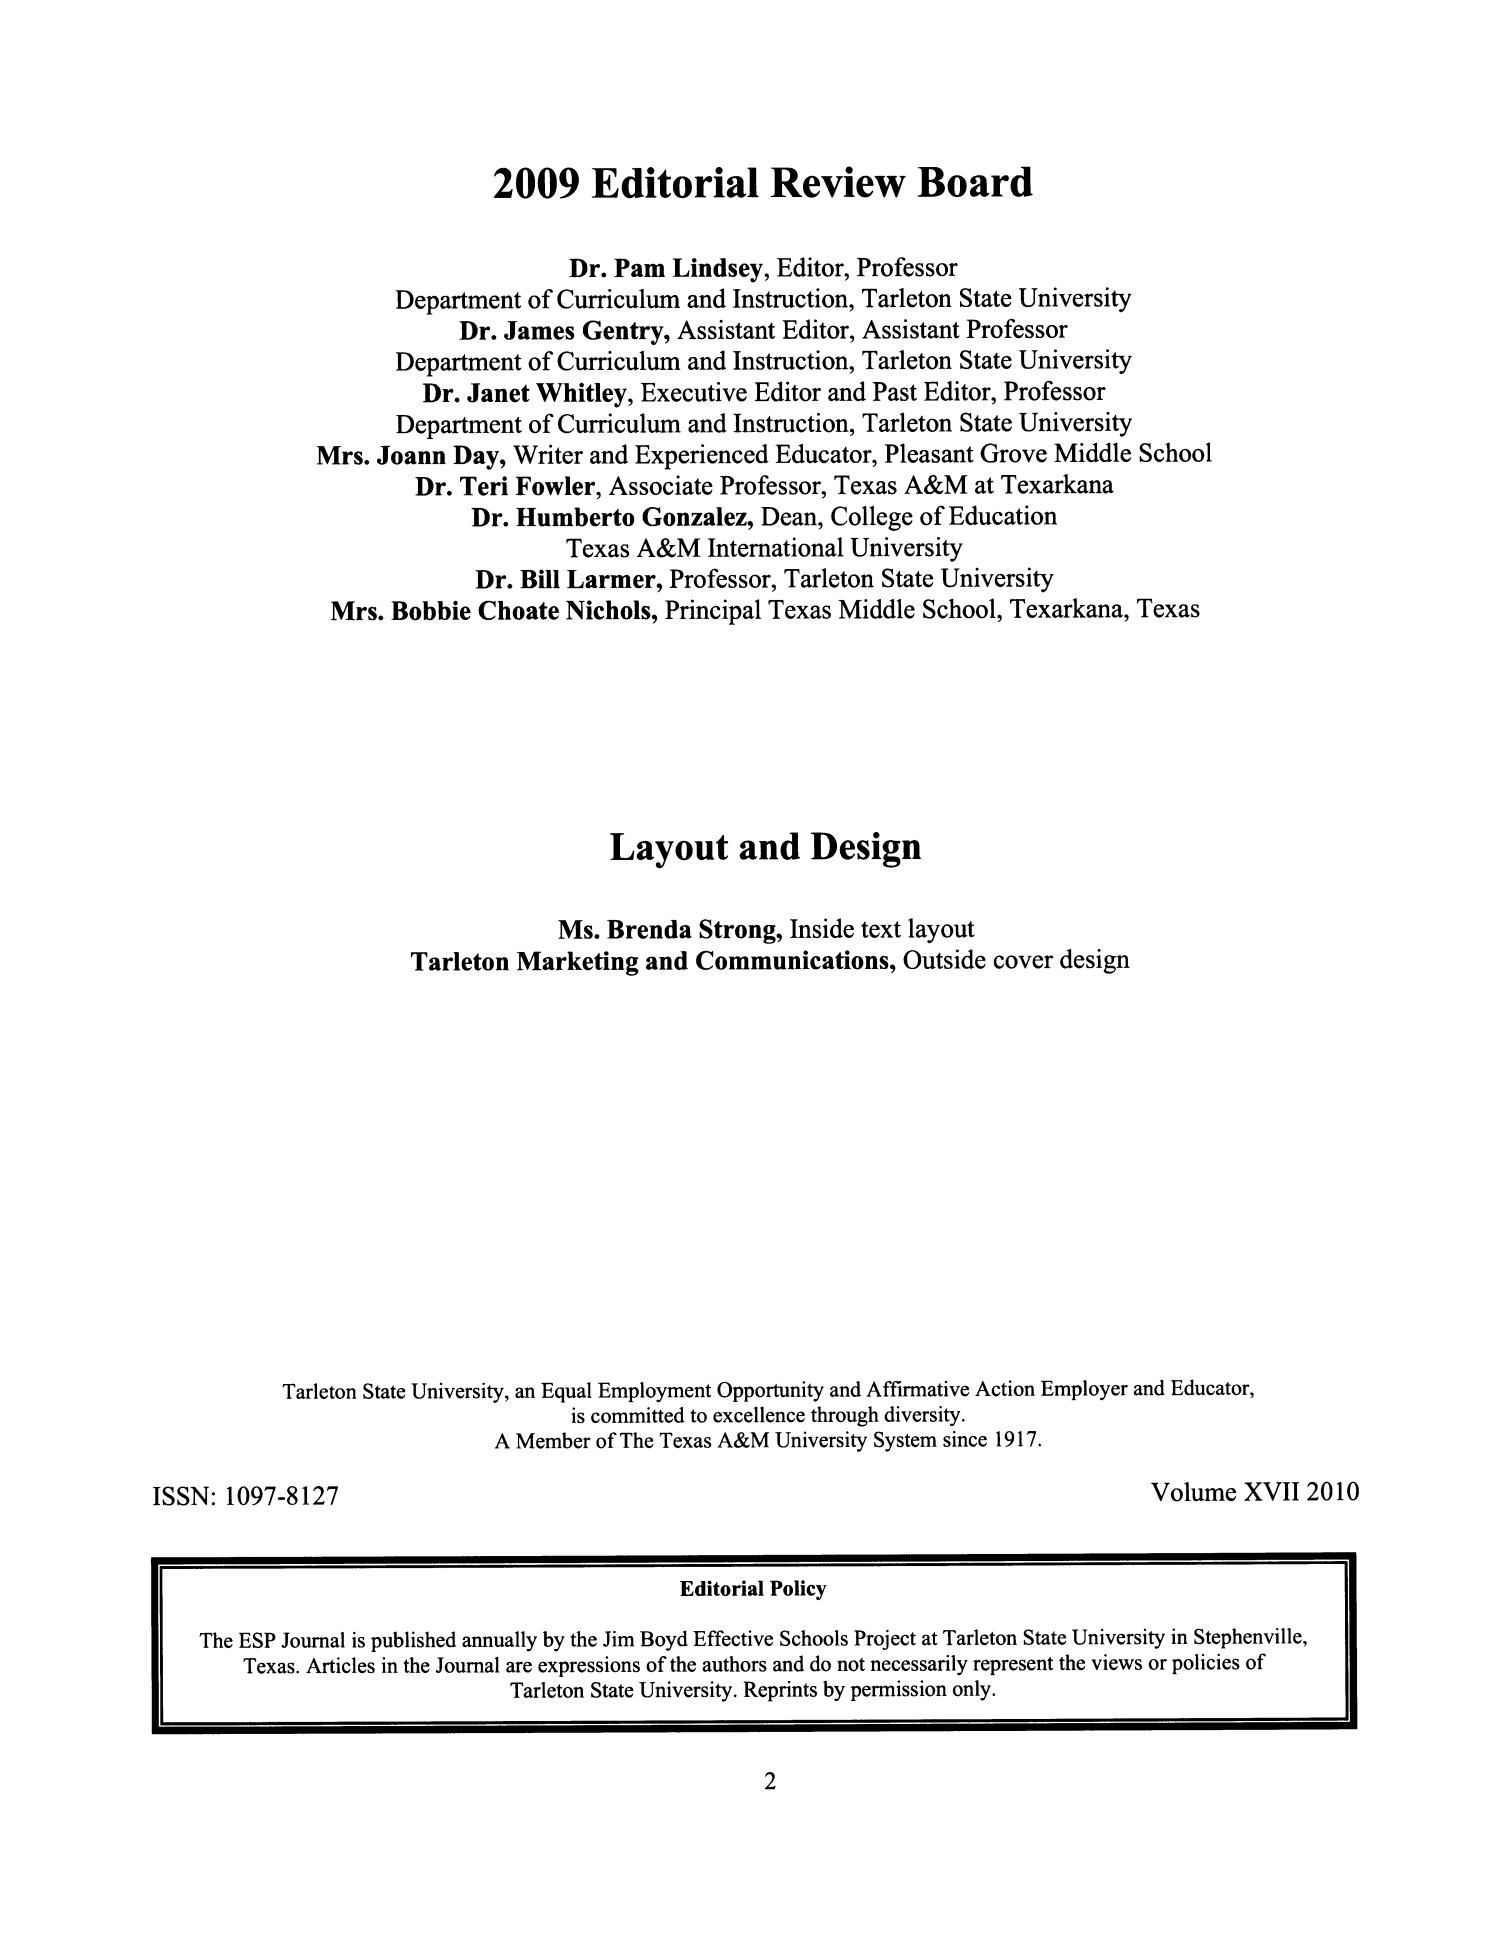 Journal of the Effective Schools Project, Volume 17, 2010
                                                
                                                    2
                                                